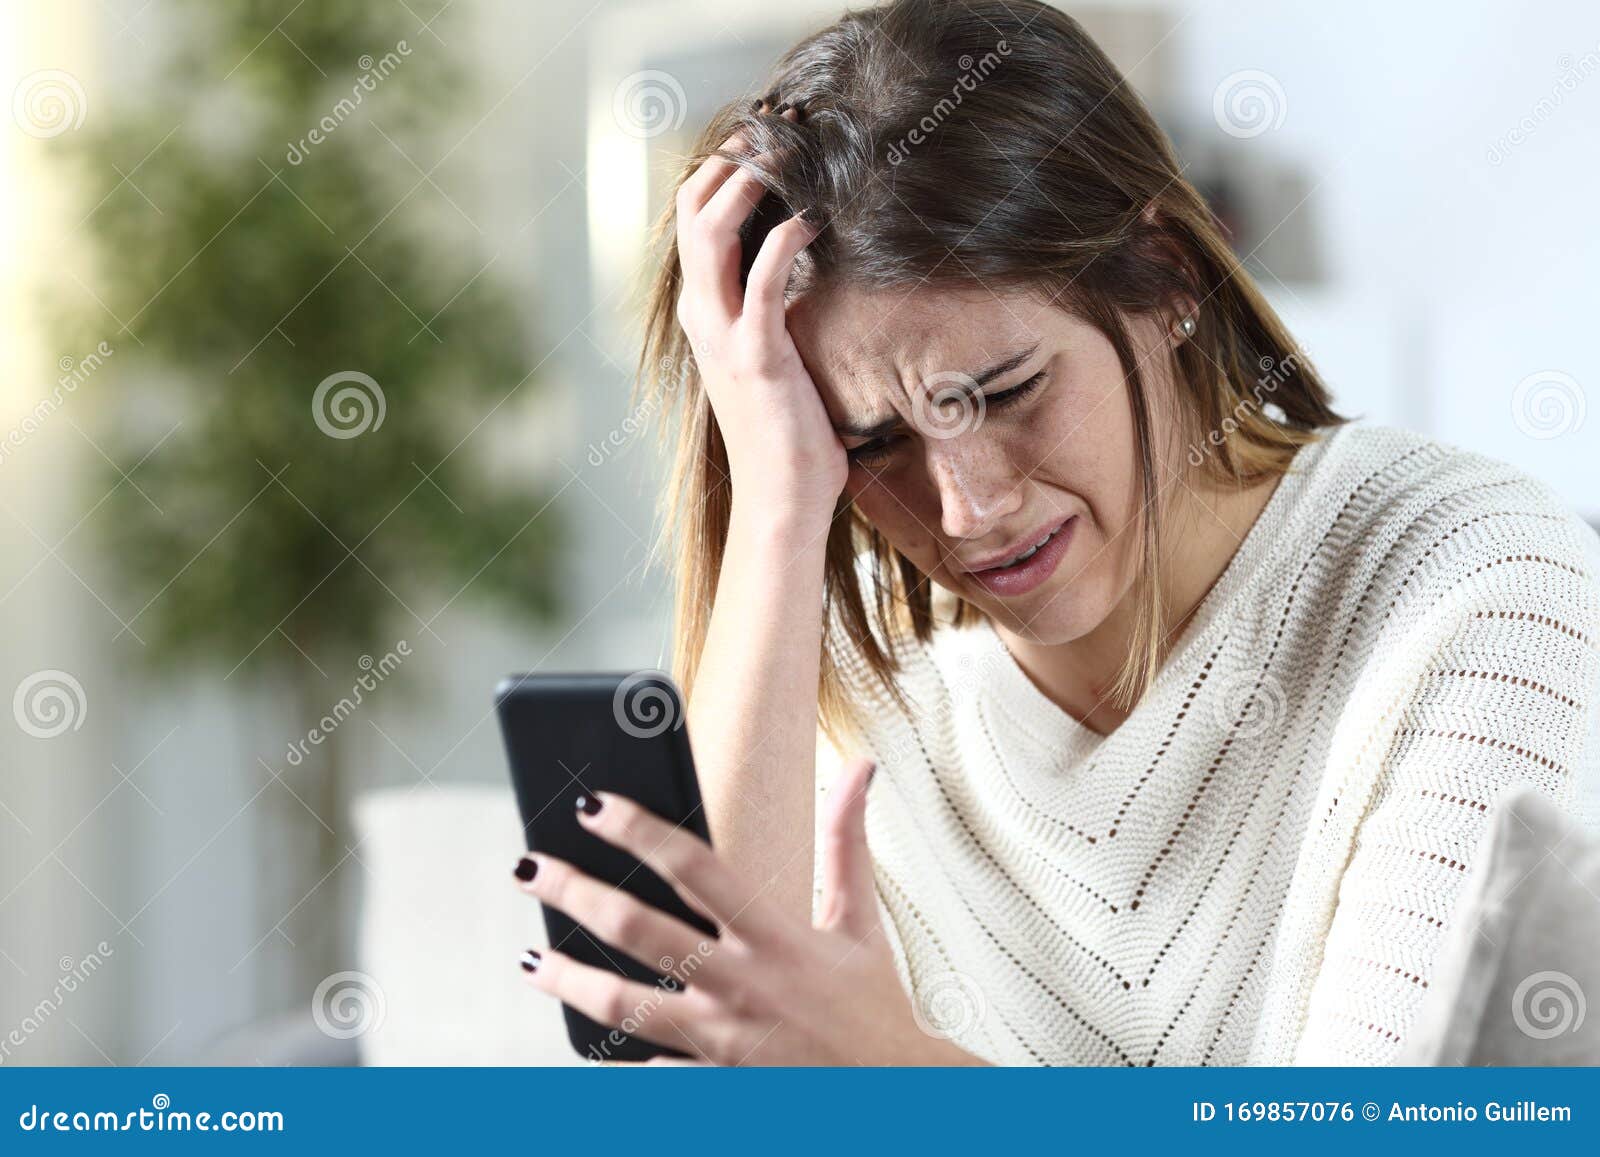 Sad Girl Complaining Holding Smart Phone at Home Stock Photo ...